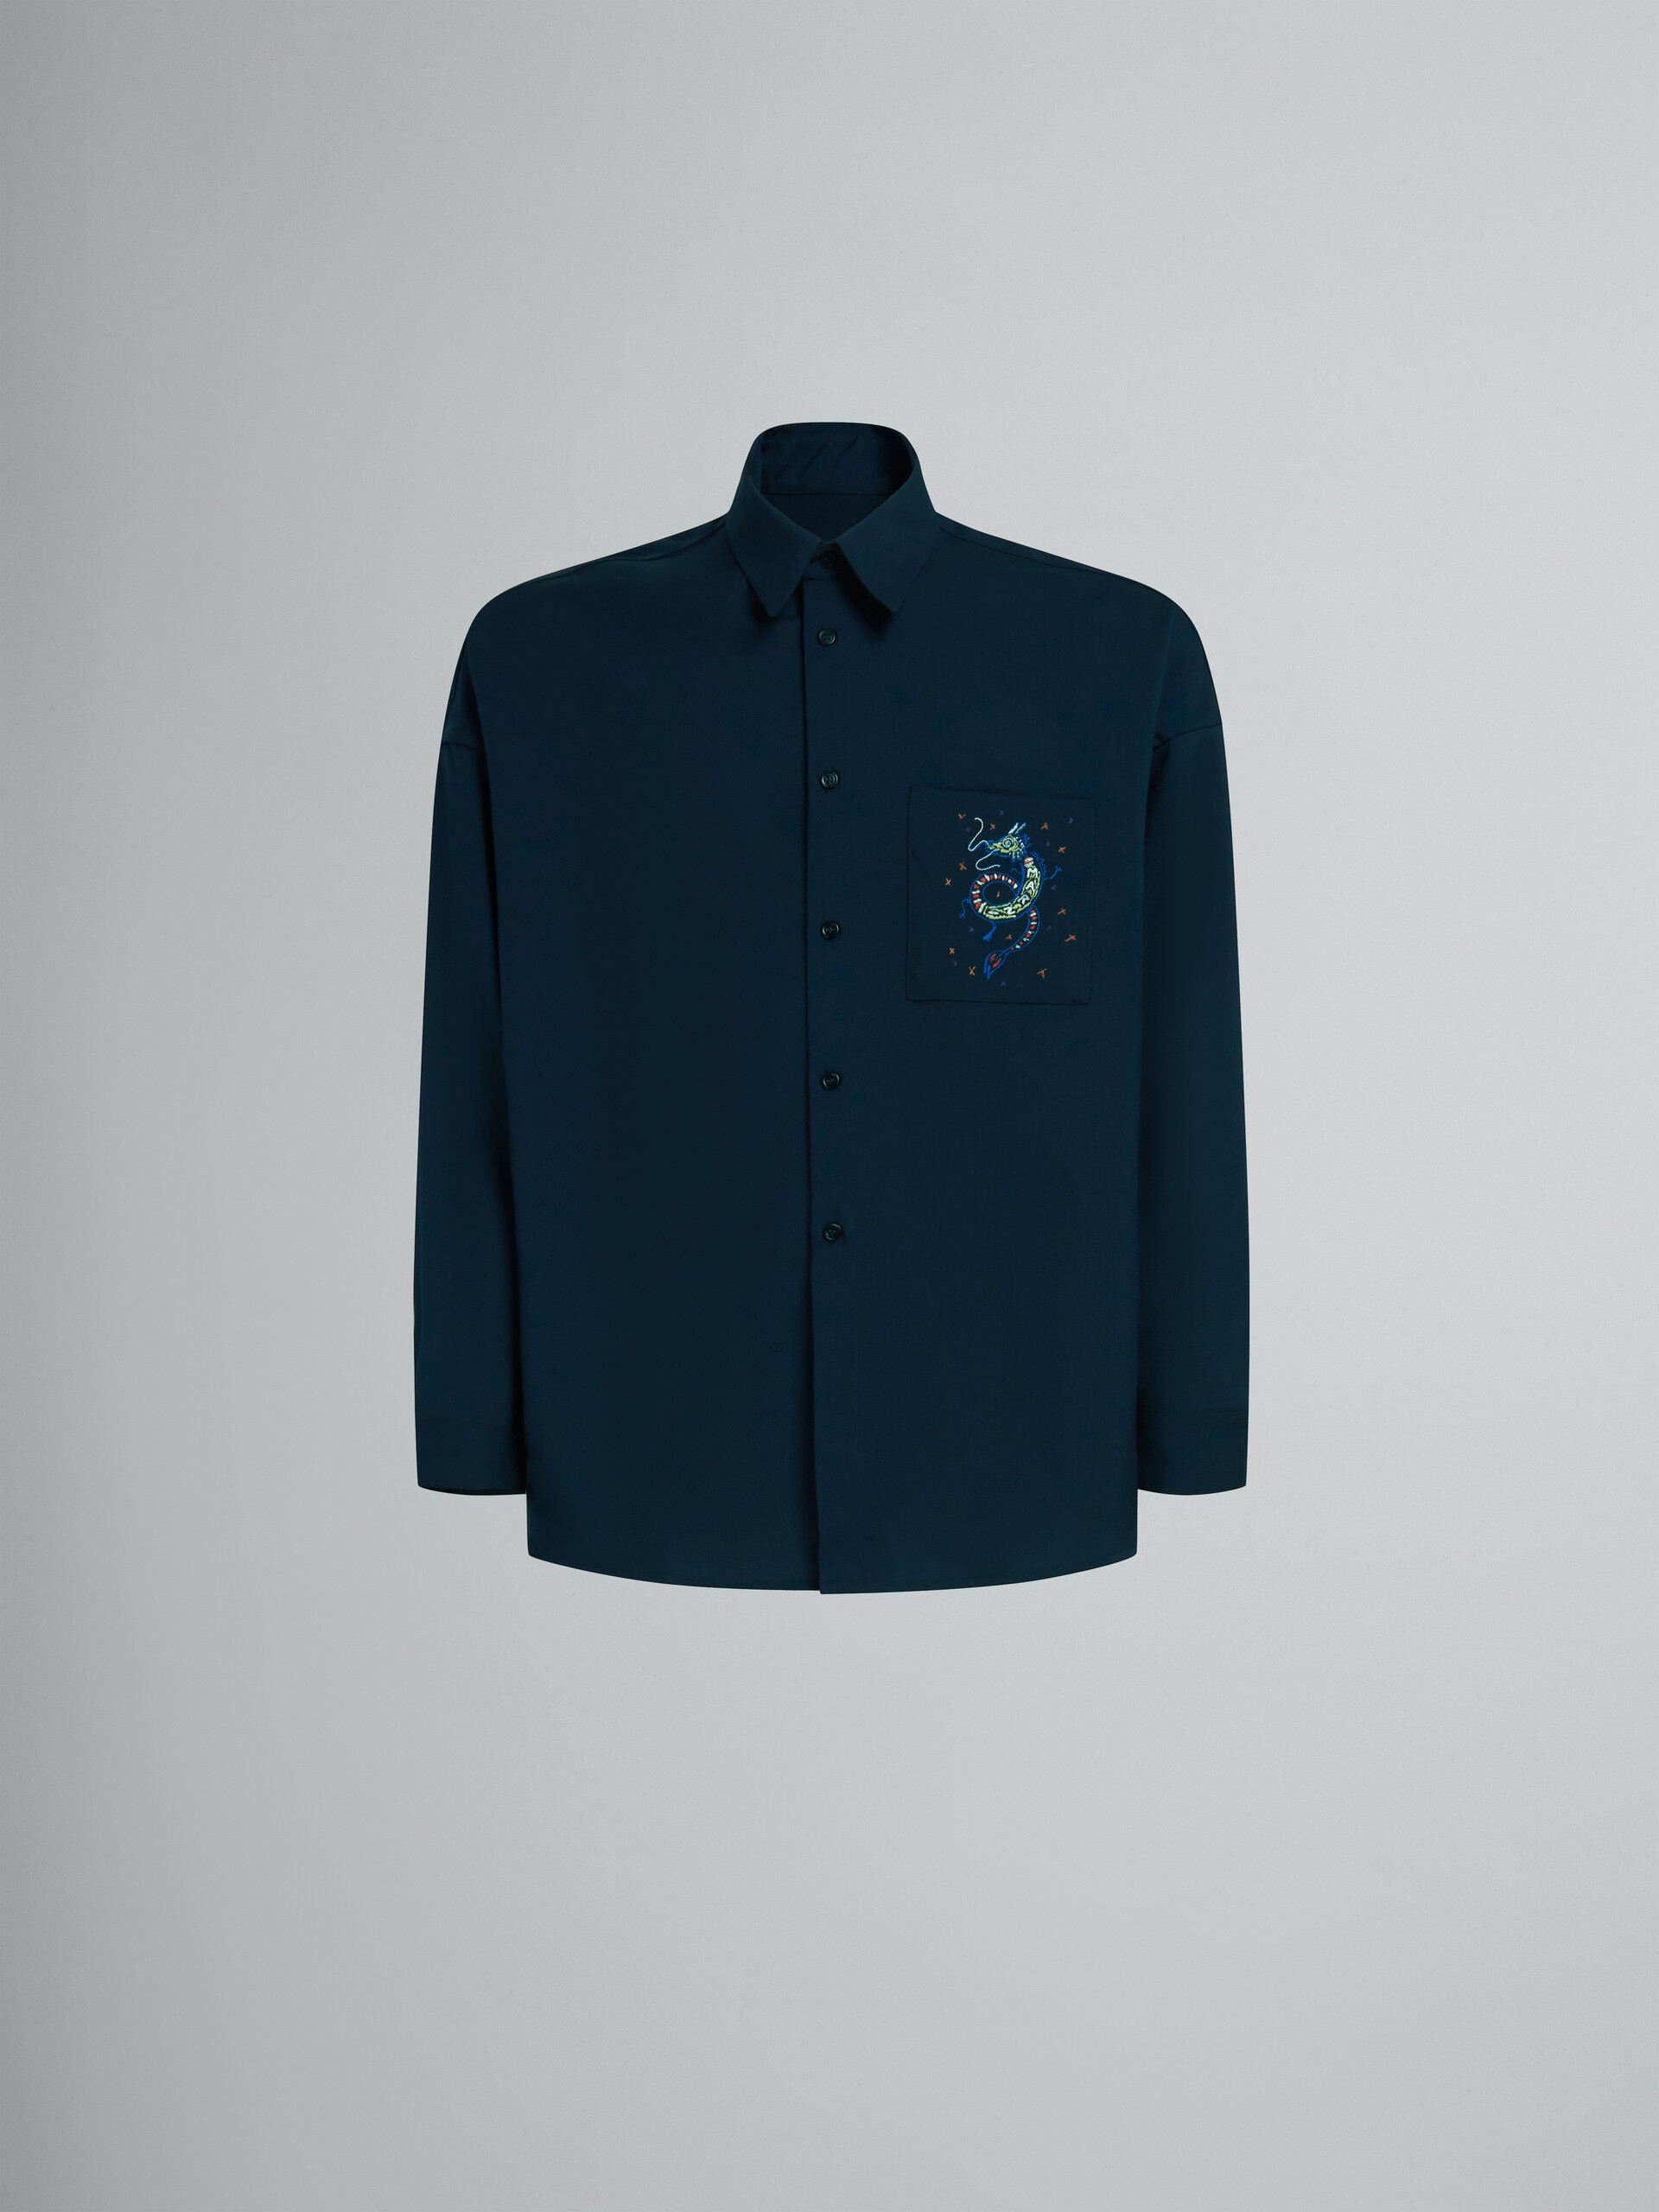 Camisa de lana azul intenso con dragón bordado - Camisas - Image 1